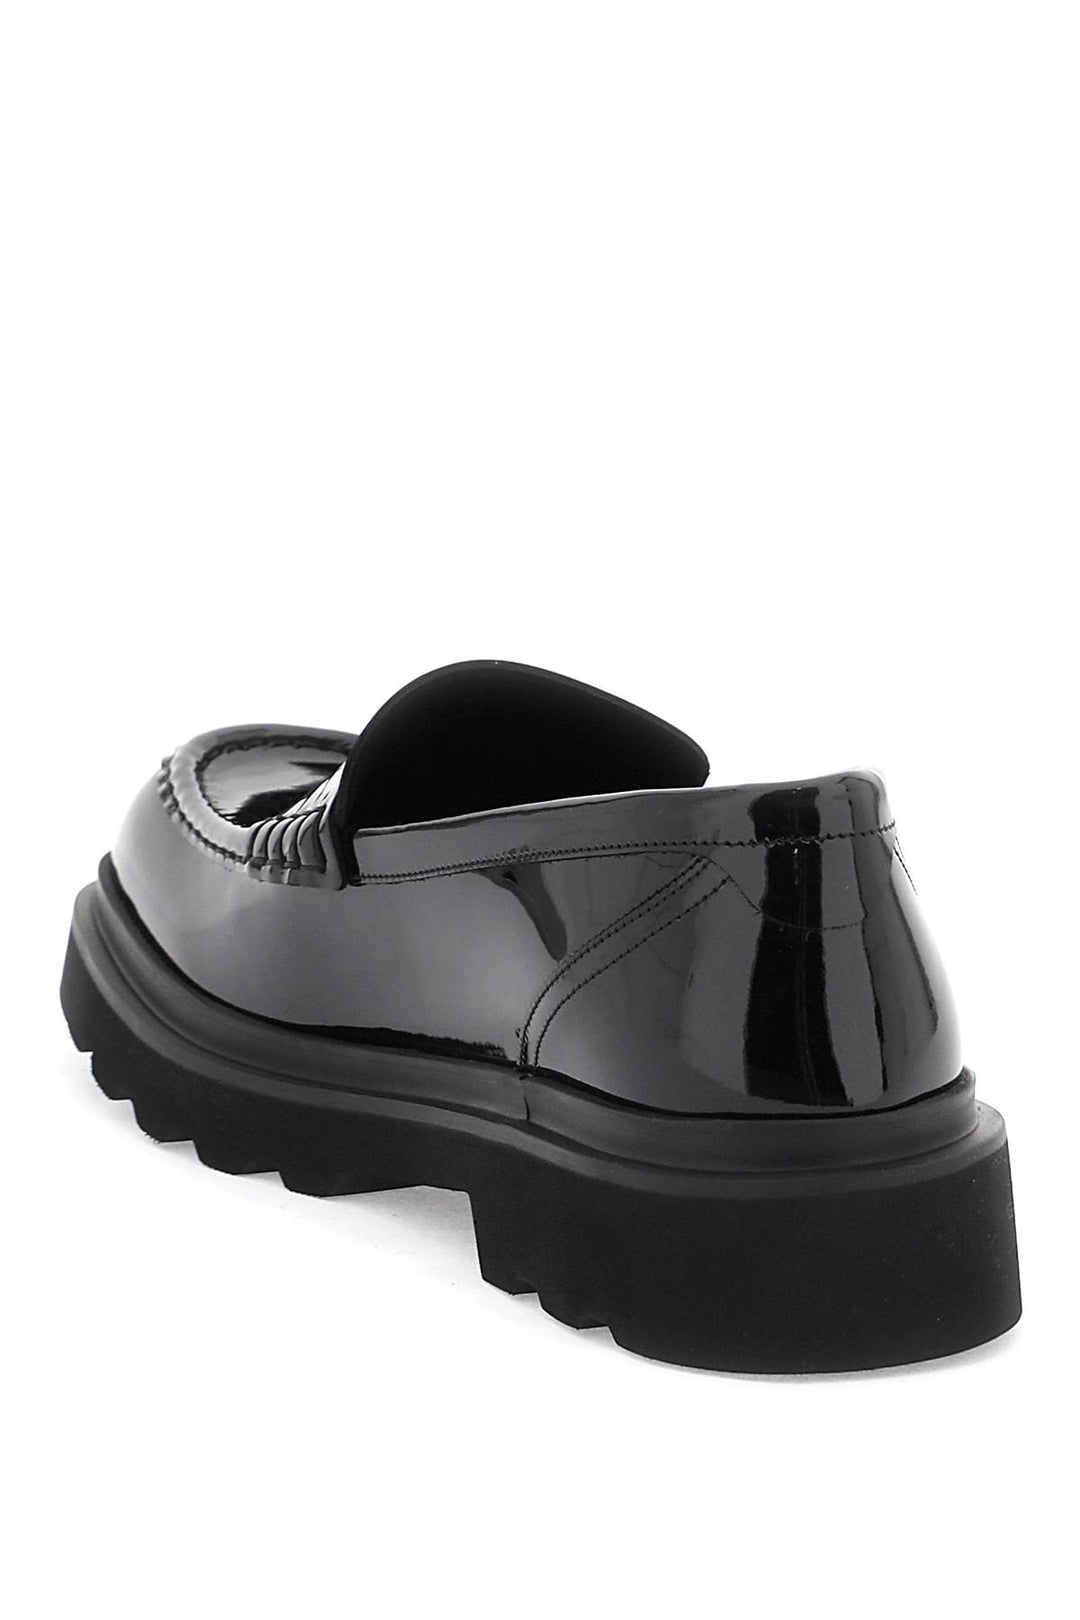 Dolce & Gabbana Patent Leather Mocassins   Black